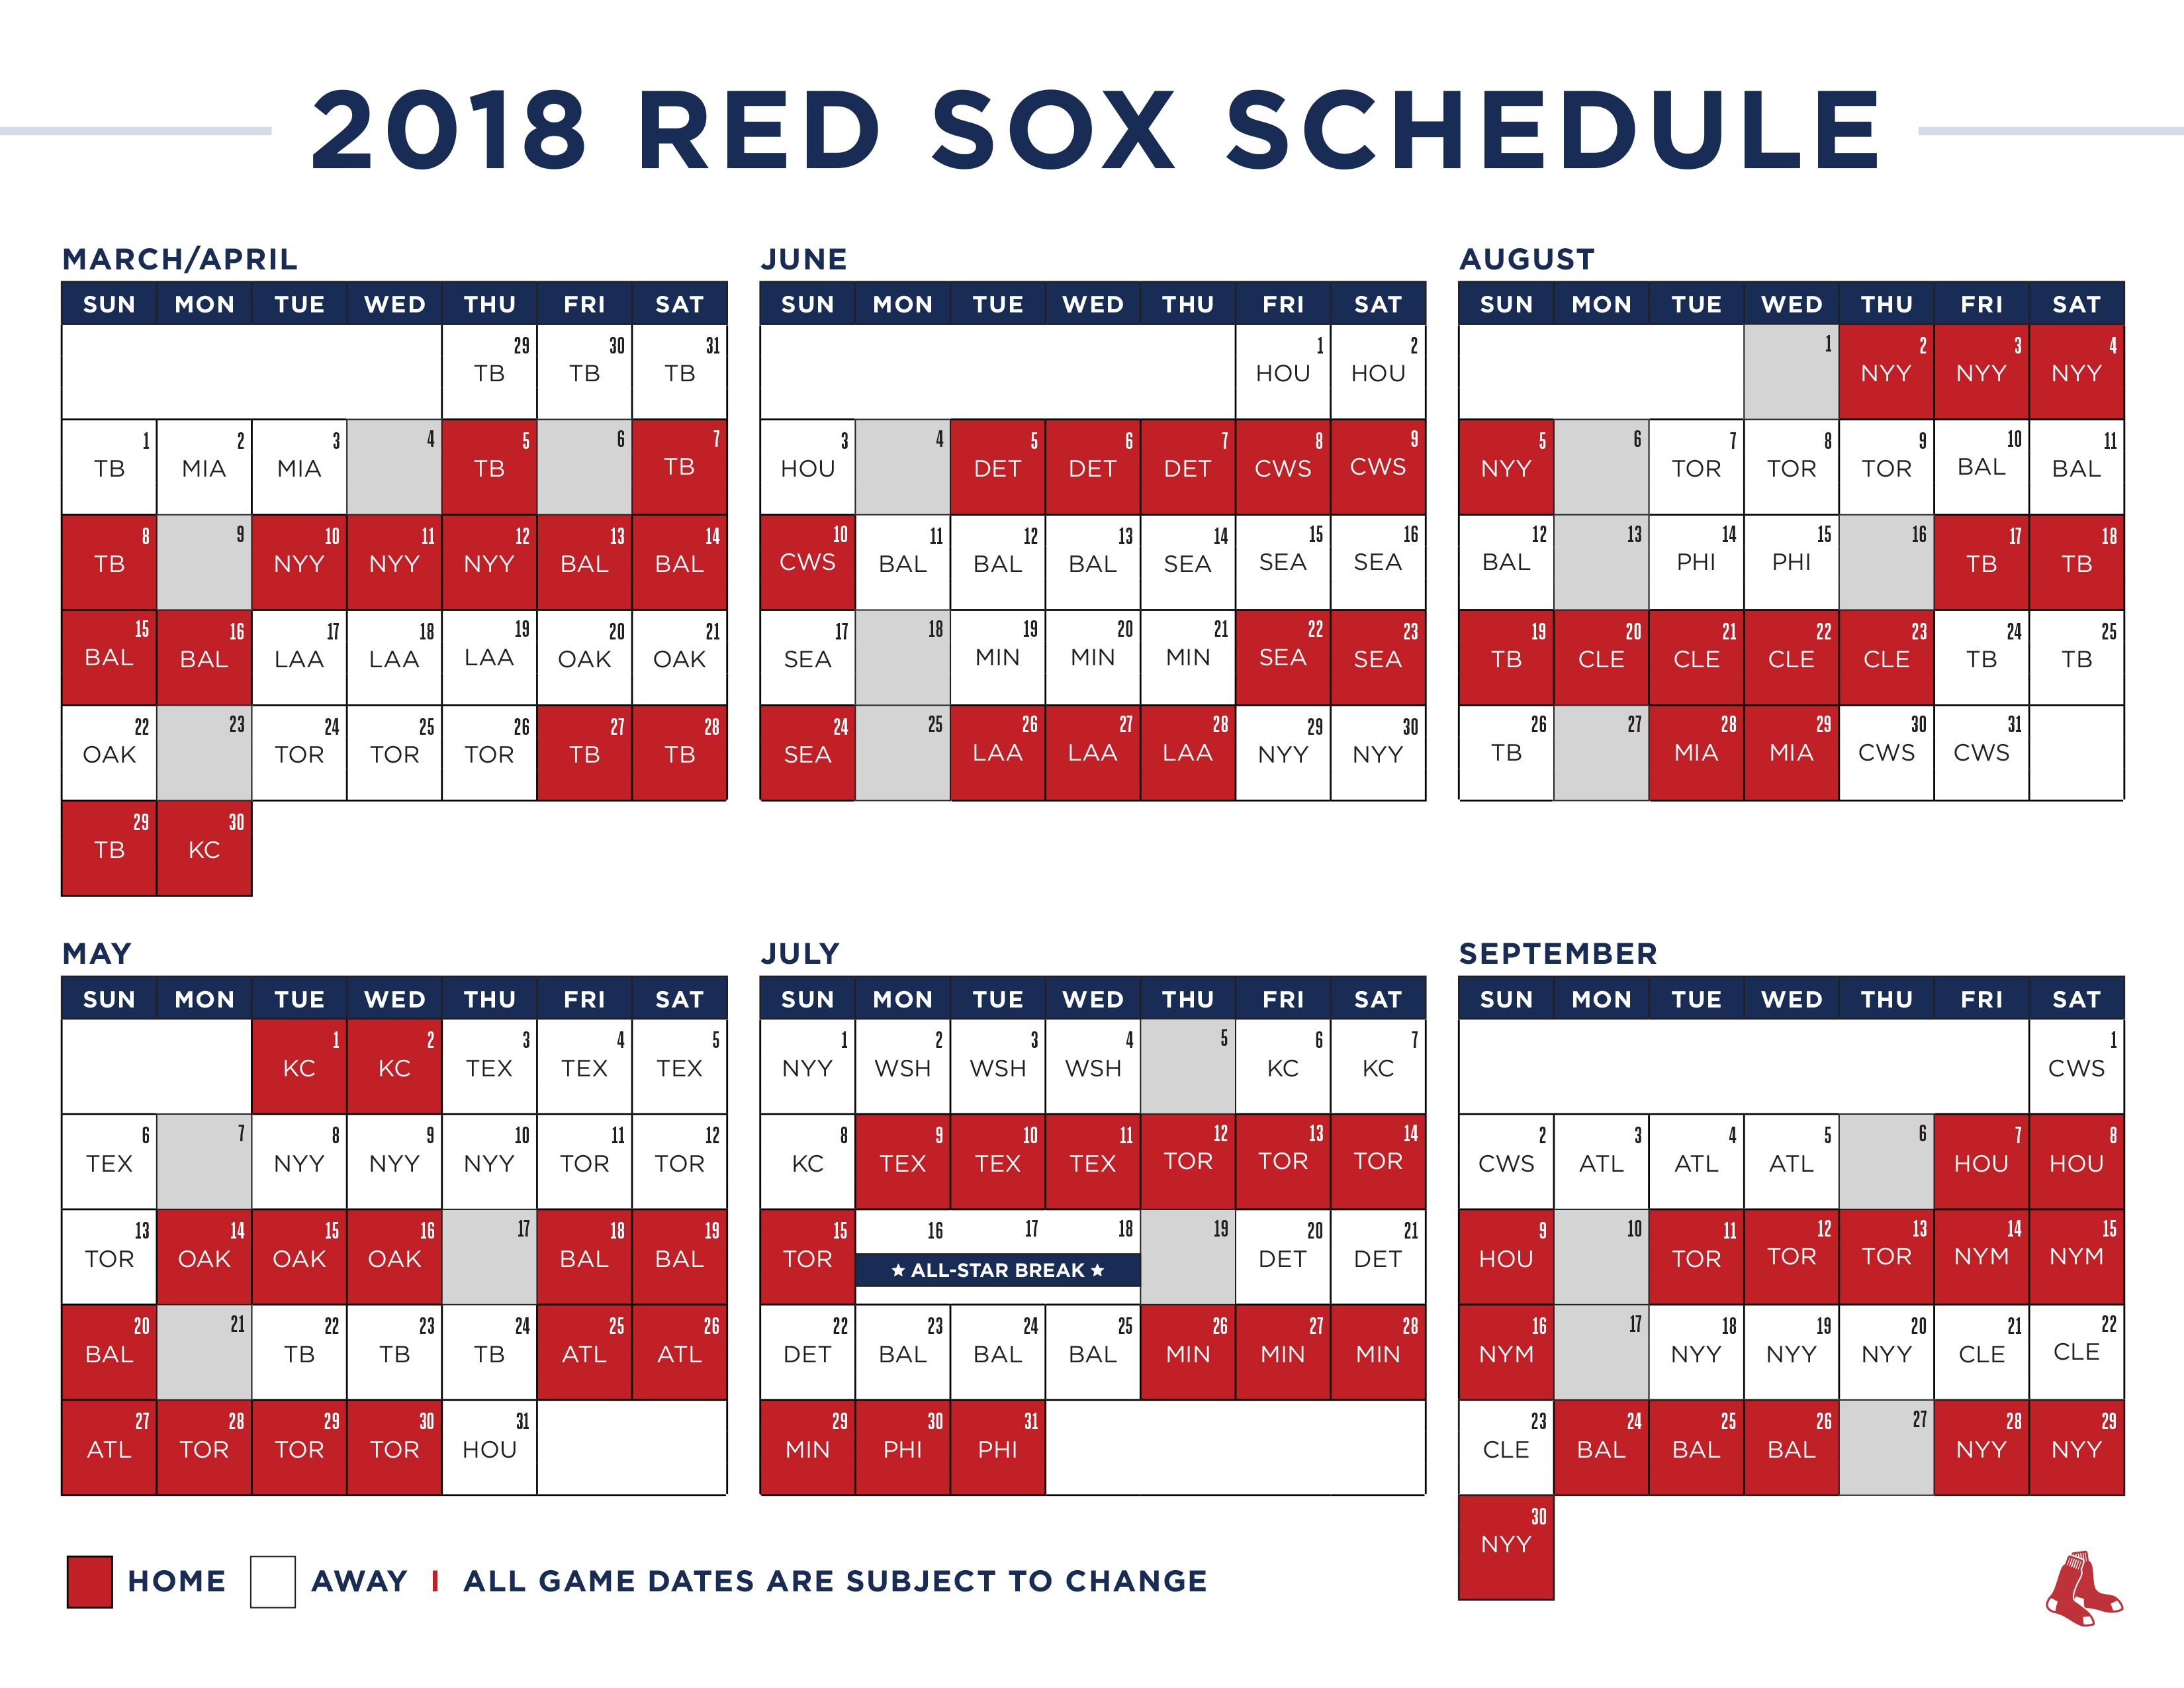 2018 World Series Schedule: Boston Red Sox TV, Radio